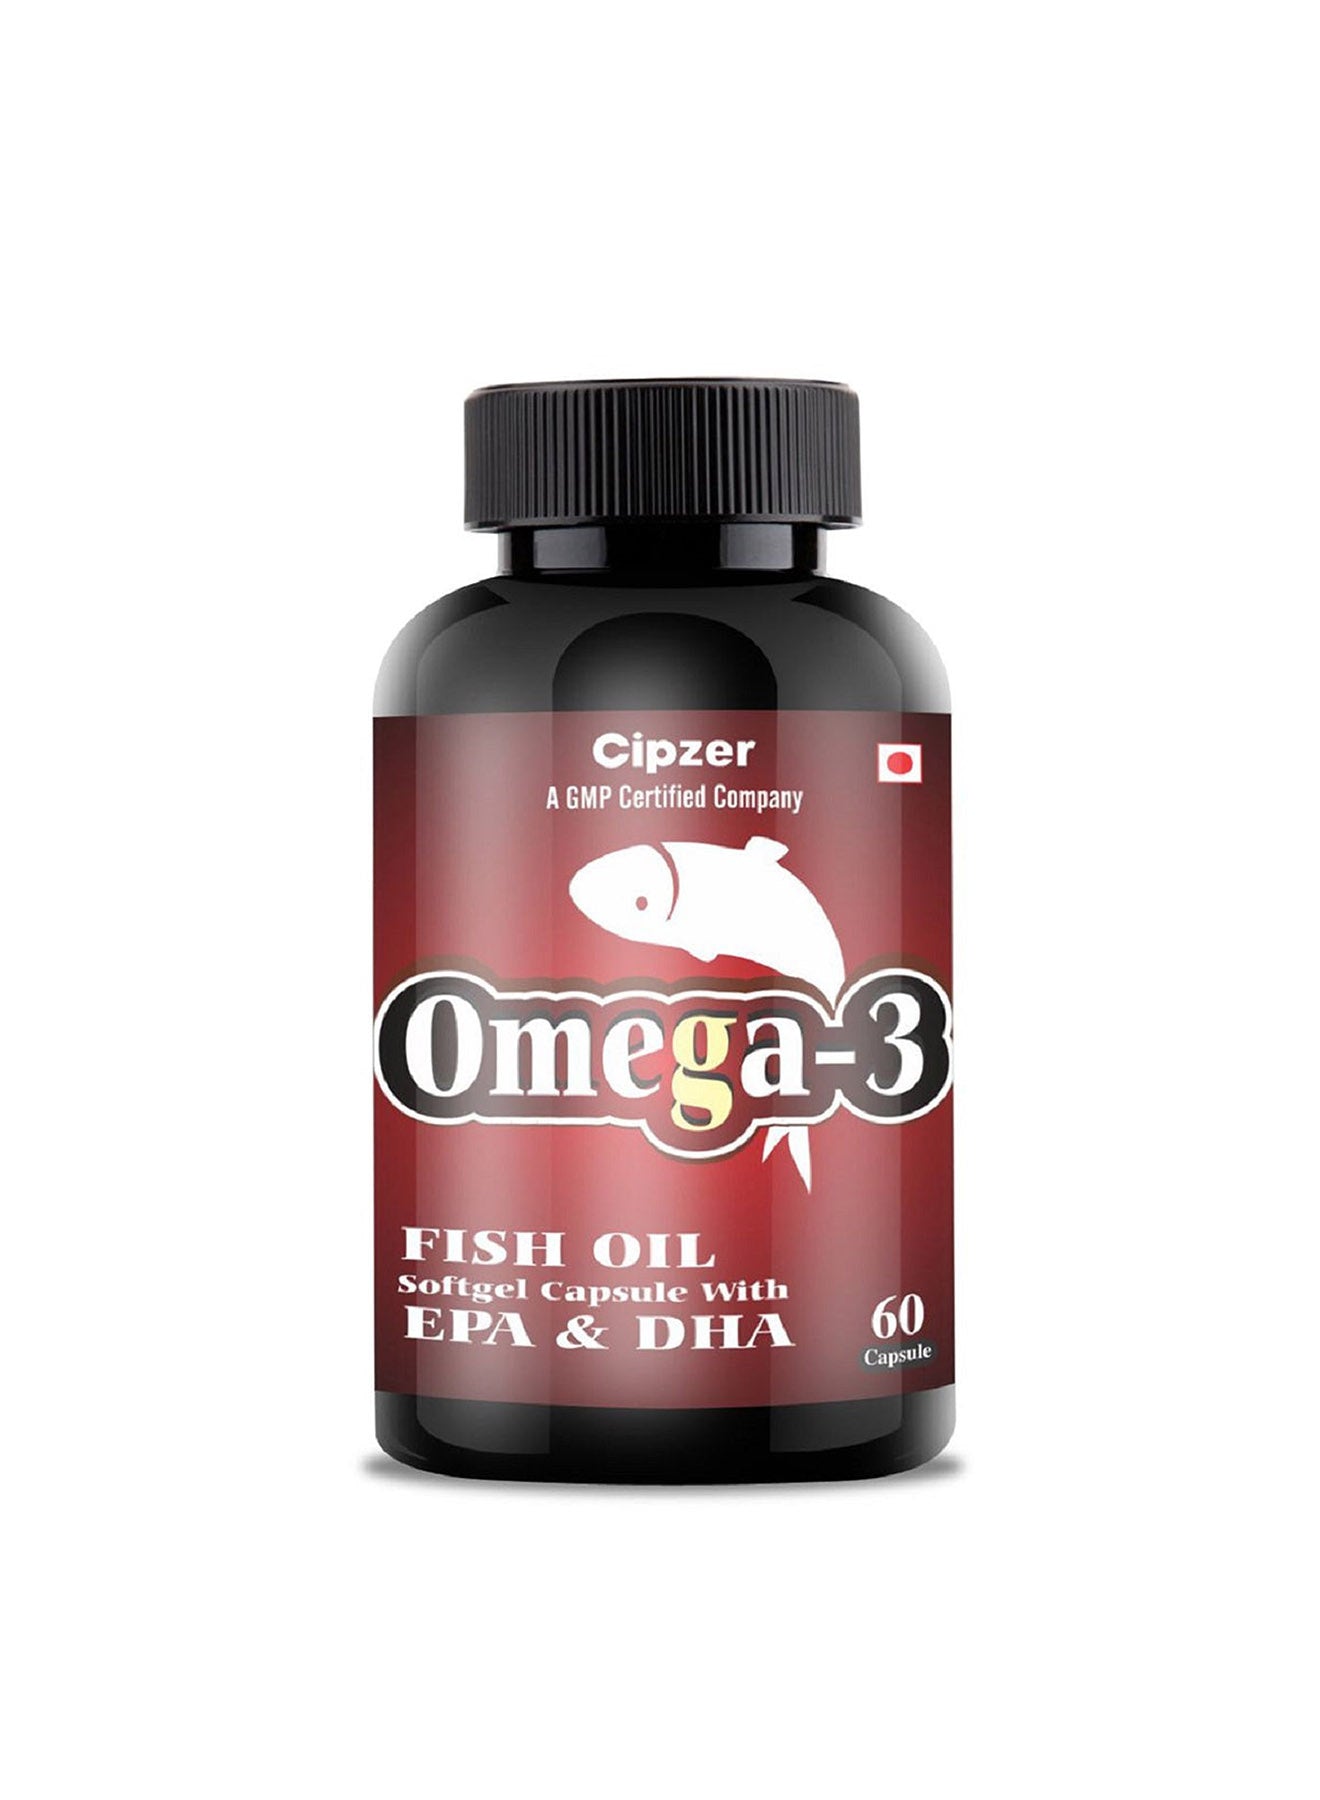 Cipzer Omega 3 Fish Oil SoftGel Capsule  1000 mg 60 Capsules Value Pack of 2 